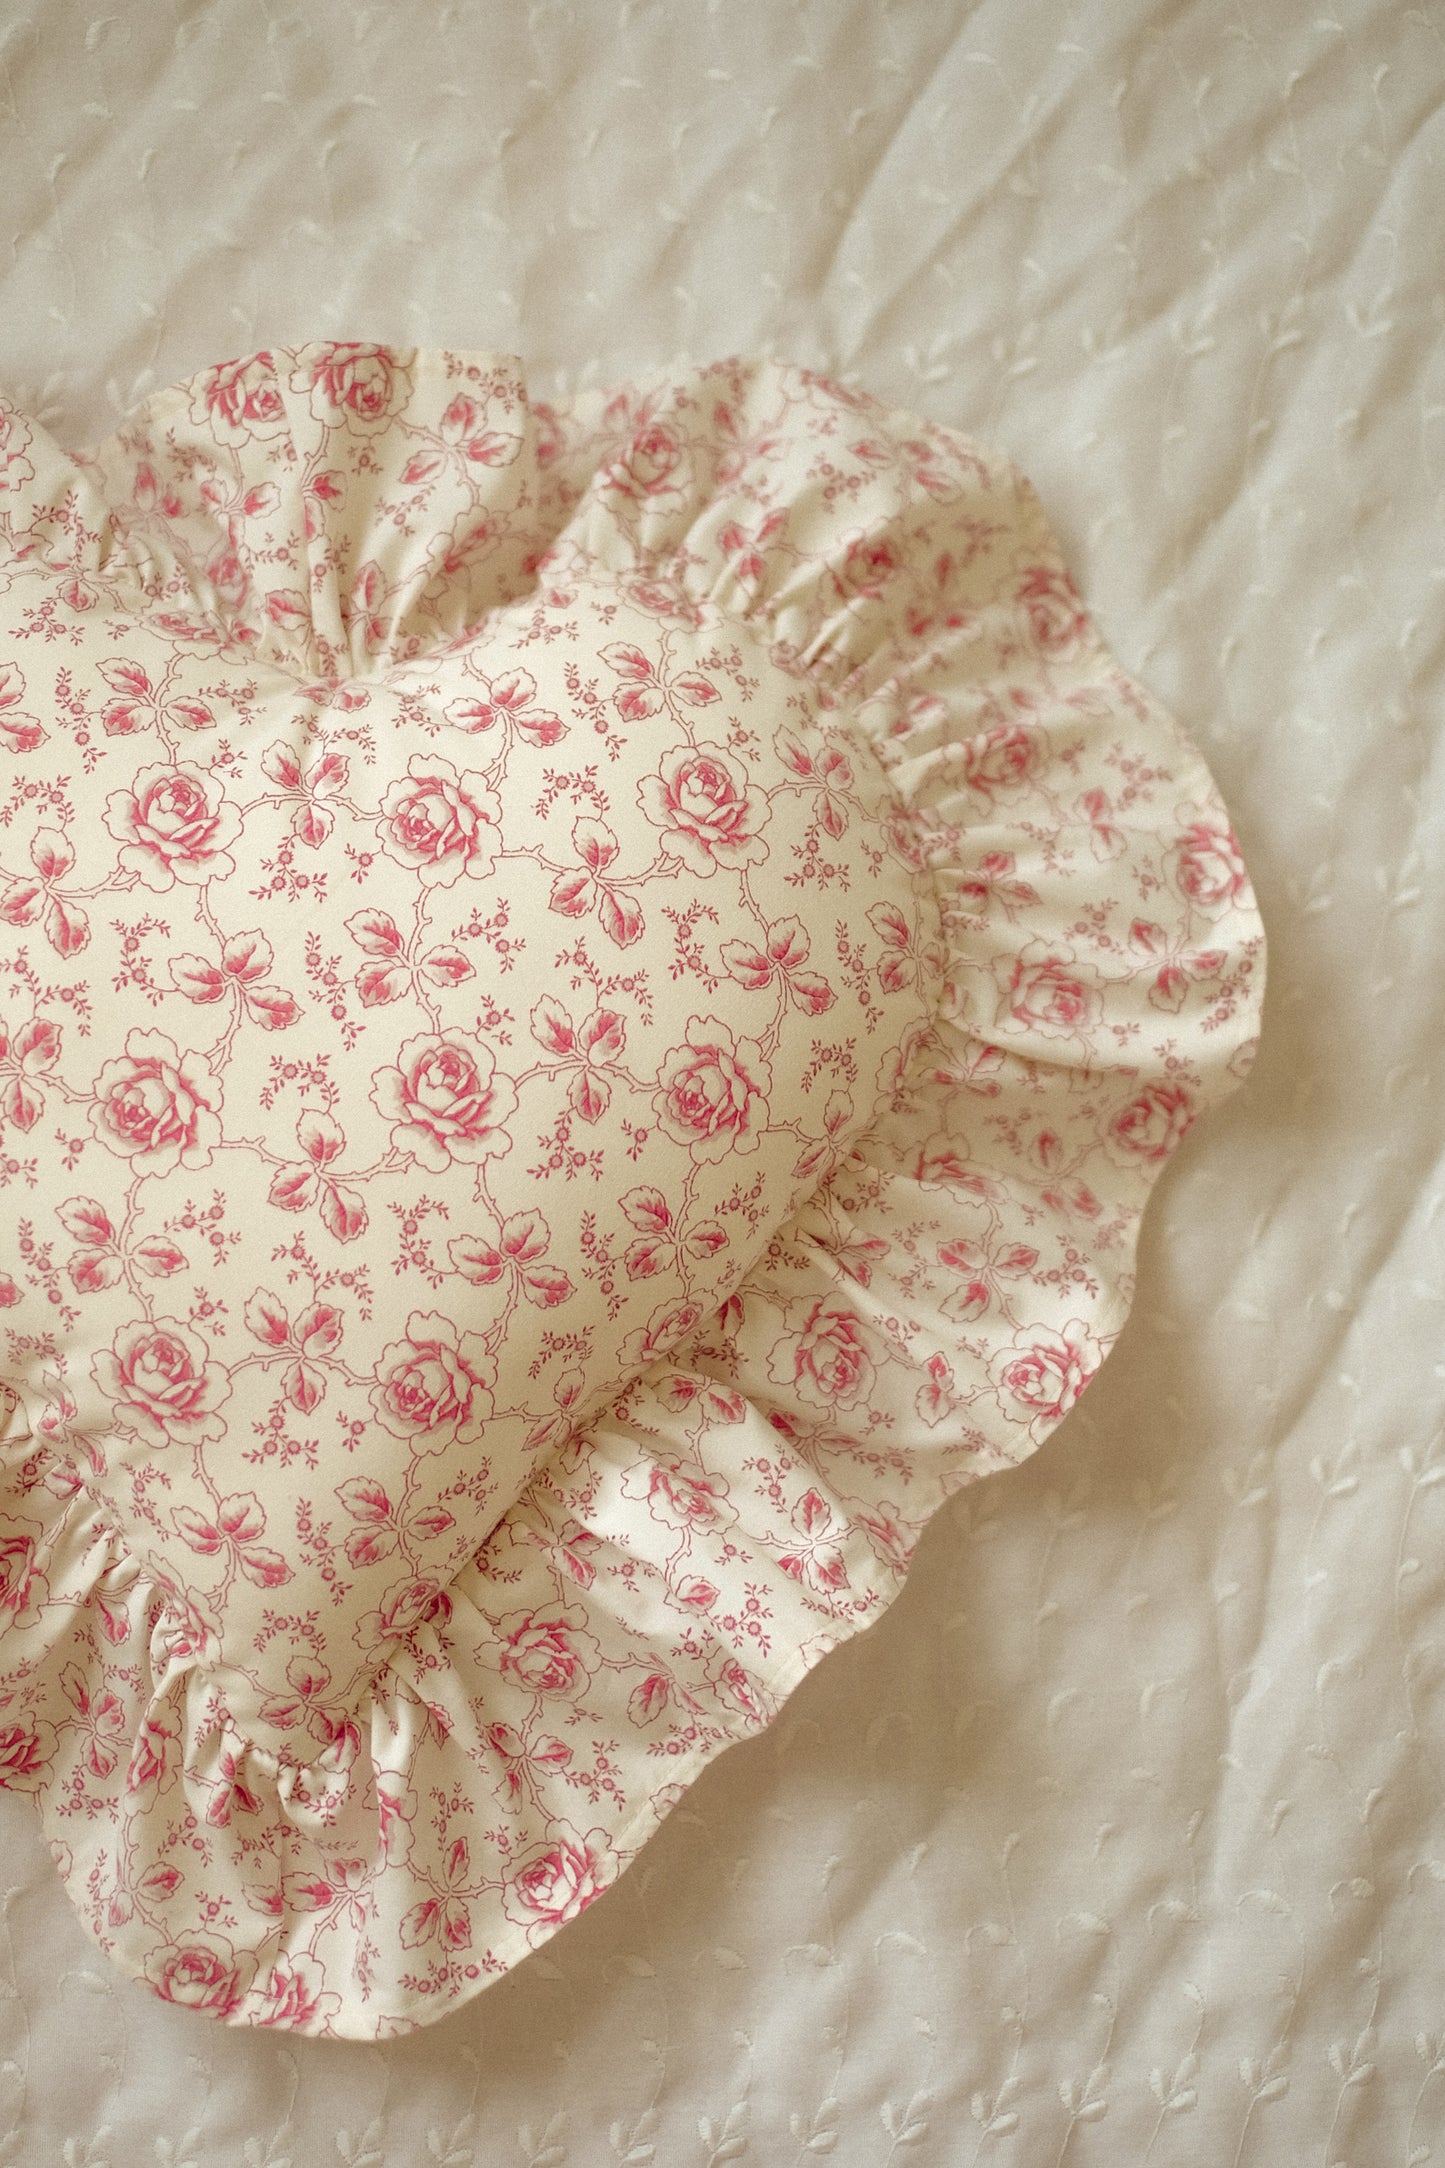 Handmade ruffled heart pillow - Rosebud♡